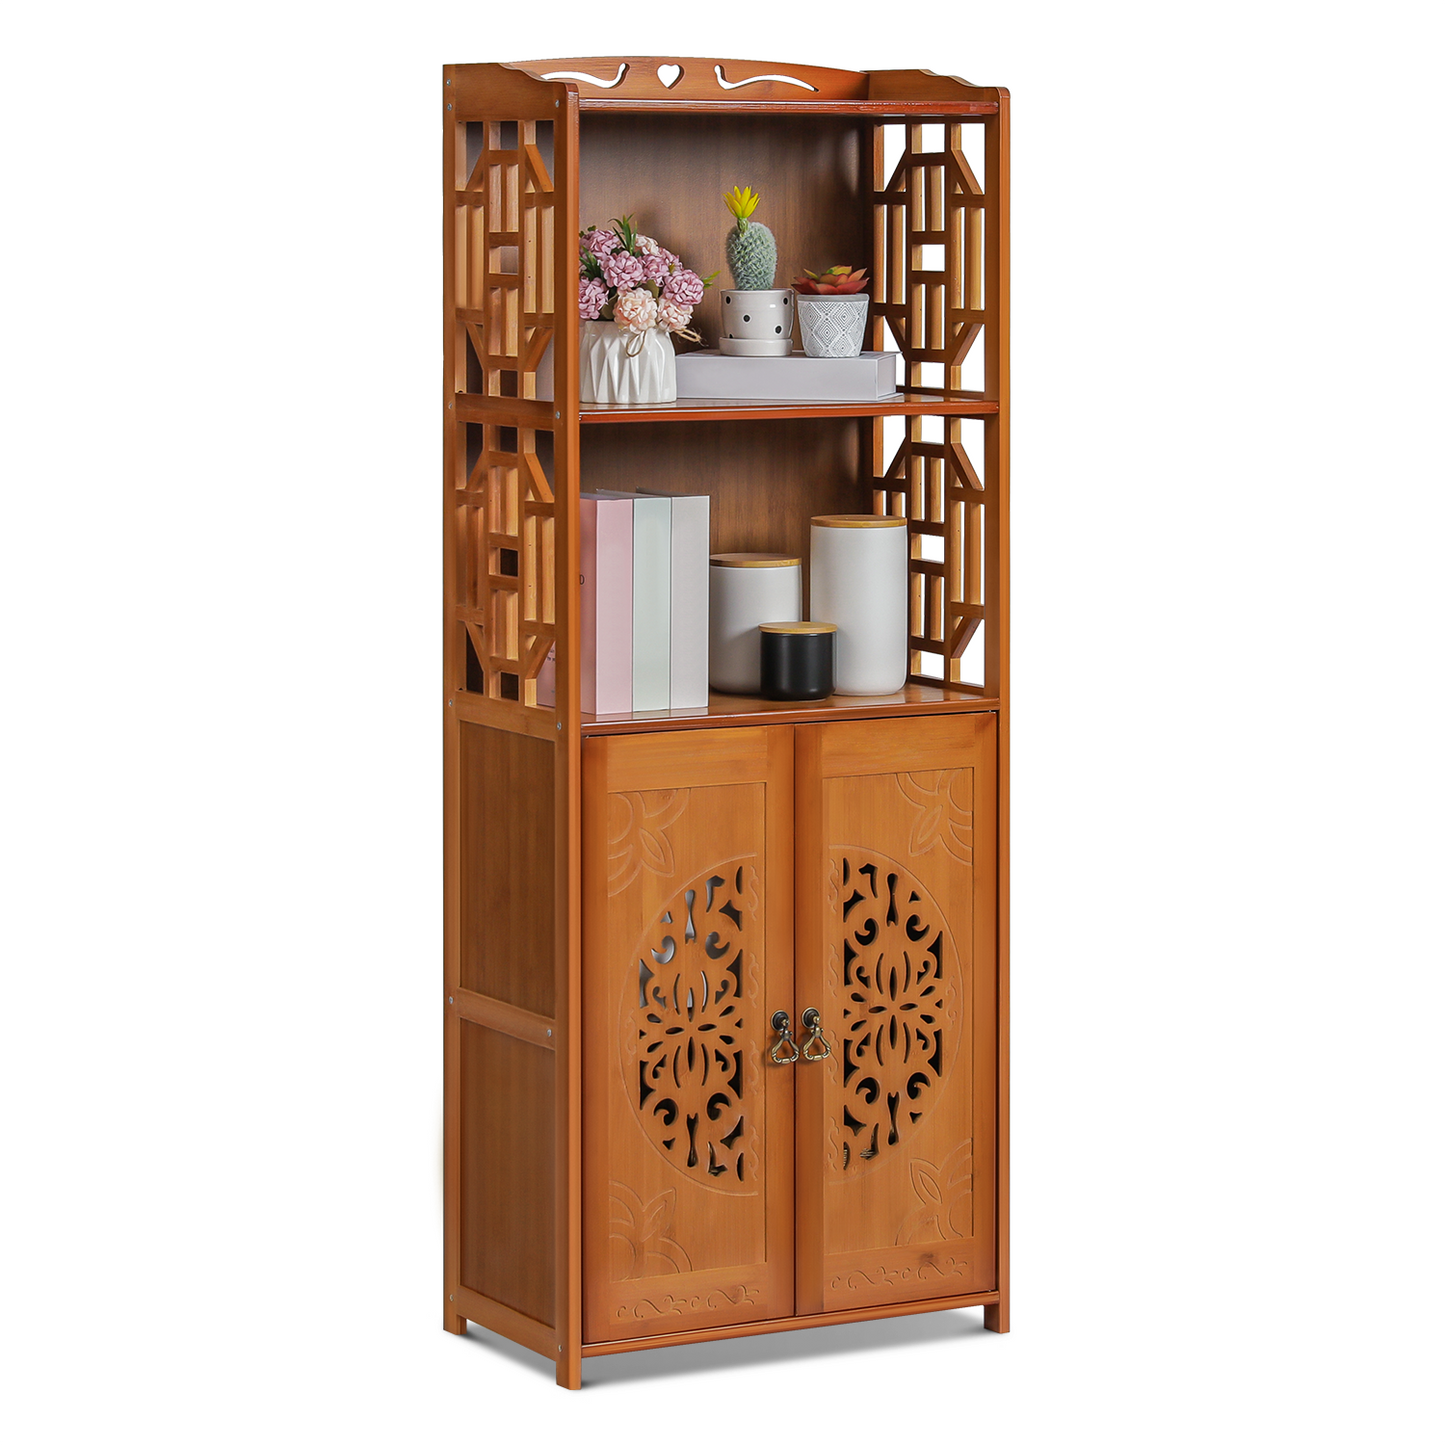 Oriental Multi-Functional Storage - with Engraved Cabinet Door - 4 Tier